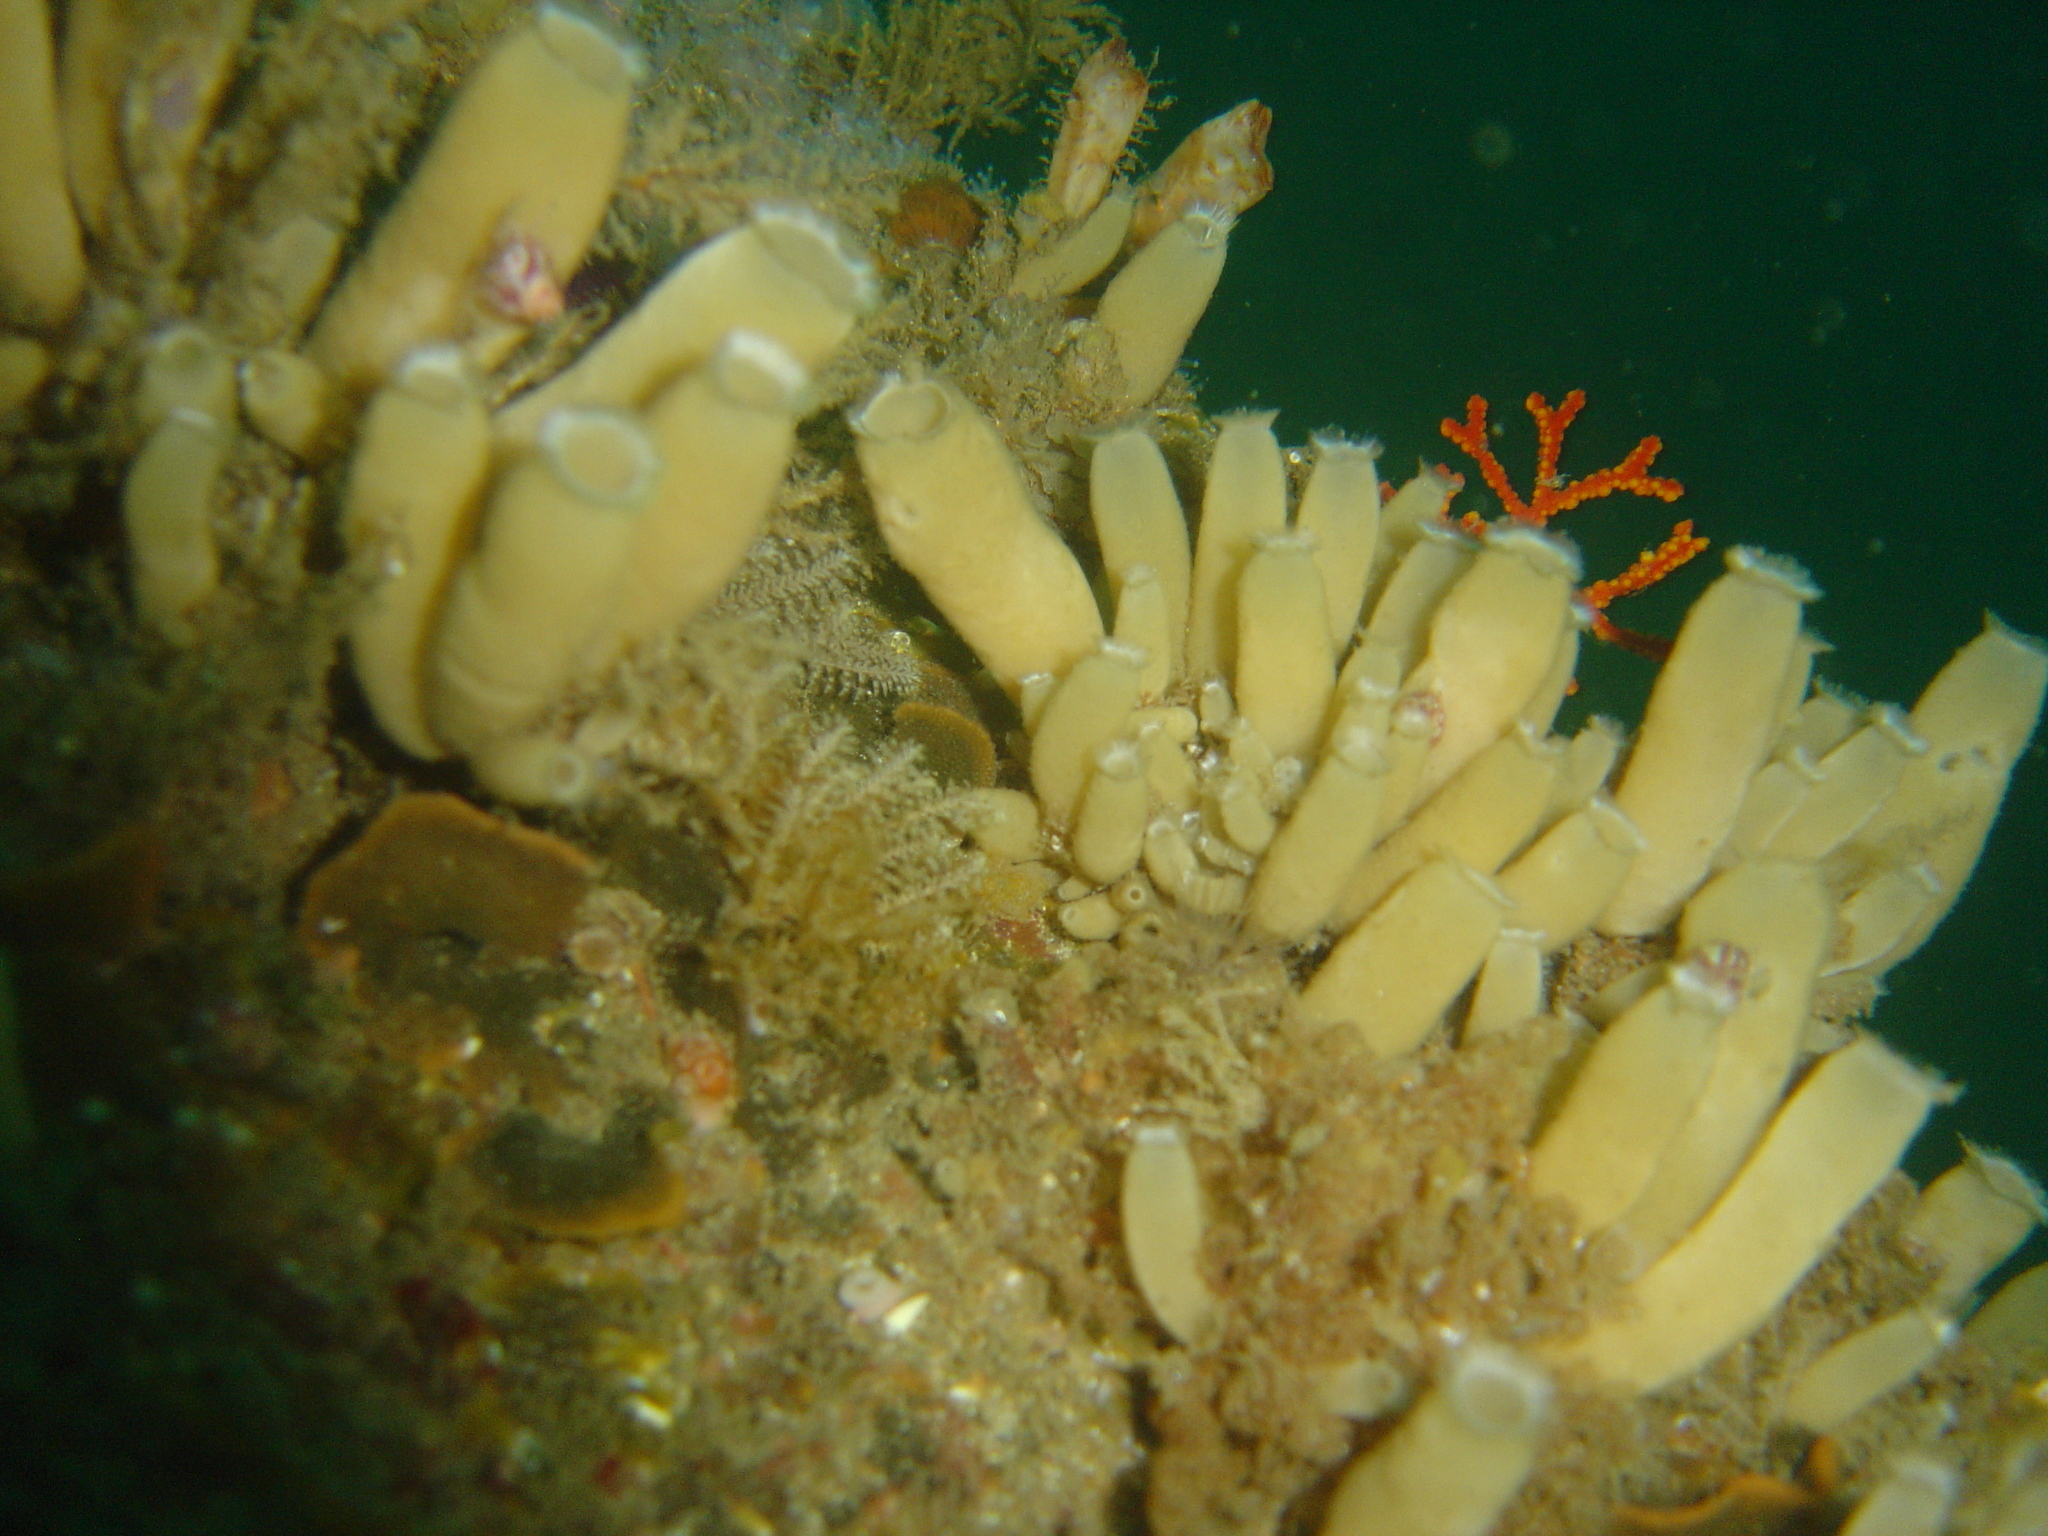 how do calcareous sponges move?